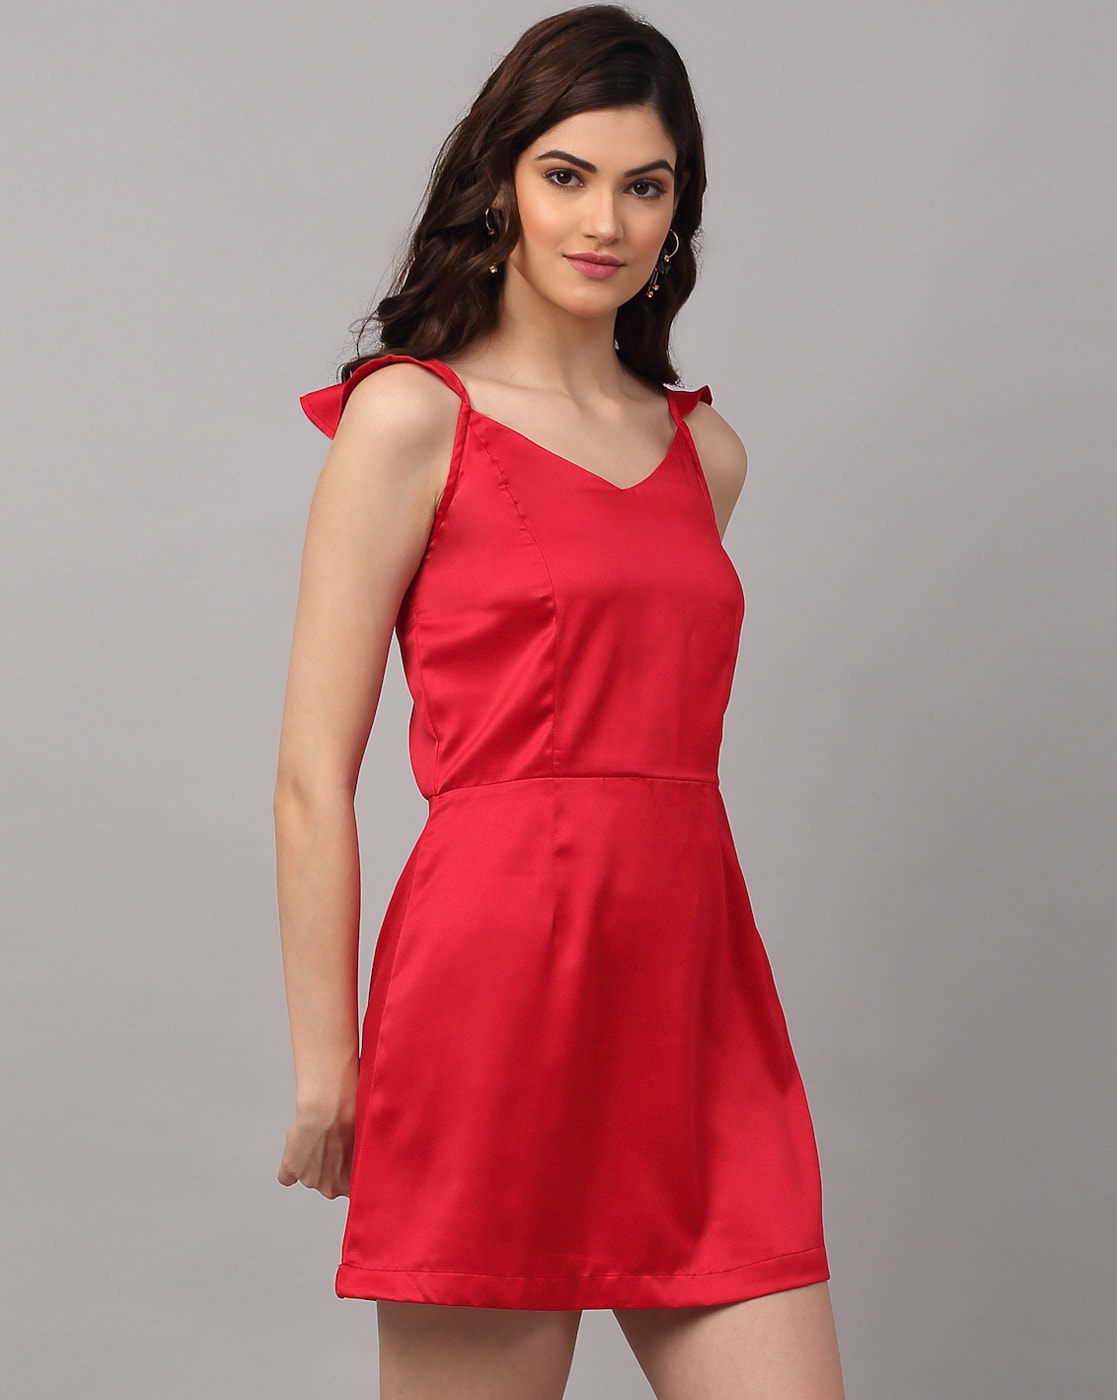 Buy Dear Me Girl's Red Polka Dot A-Line Sleeveless Midi/Knee Length Dress  for Girls at Amazon.in